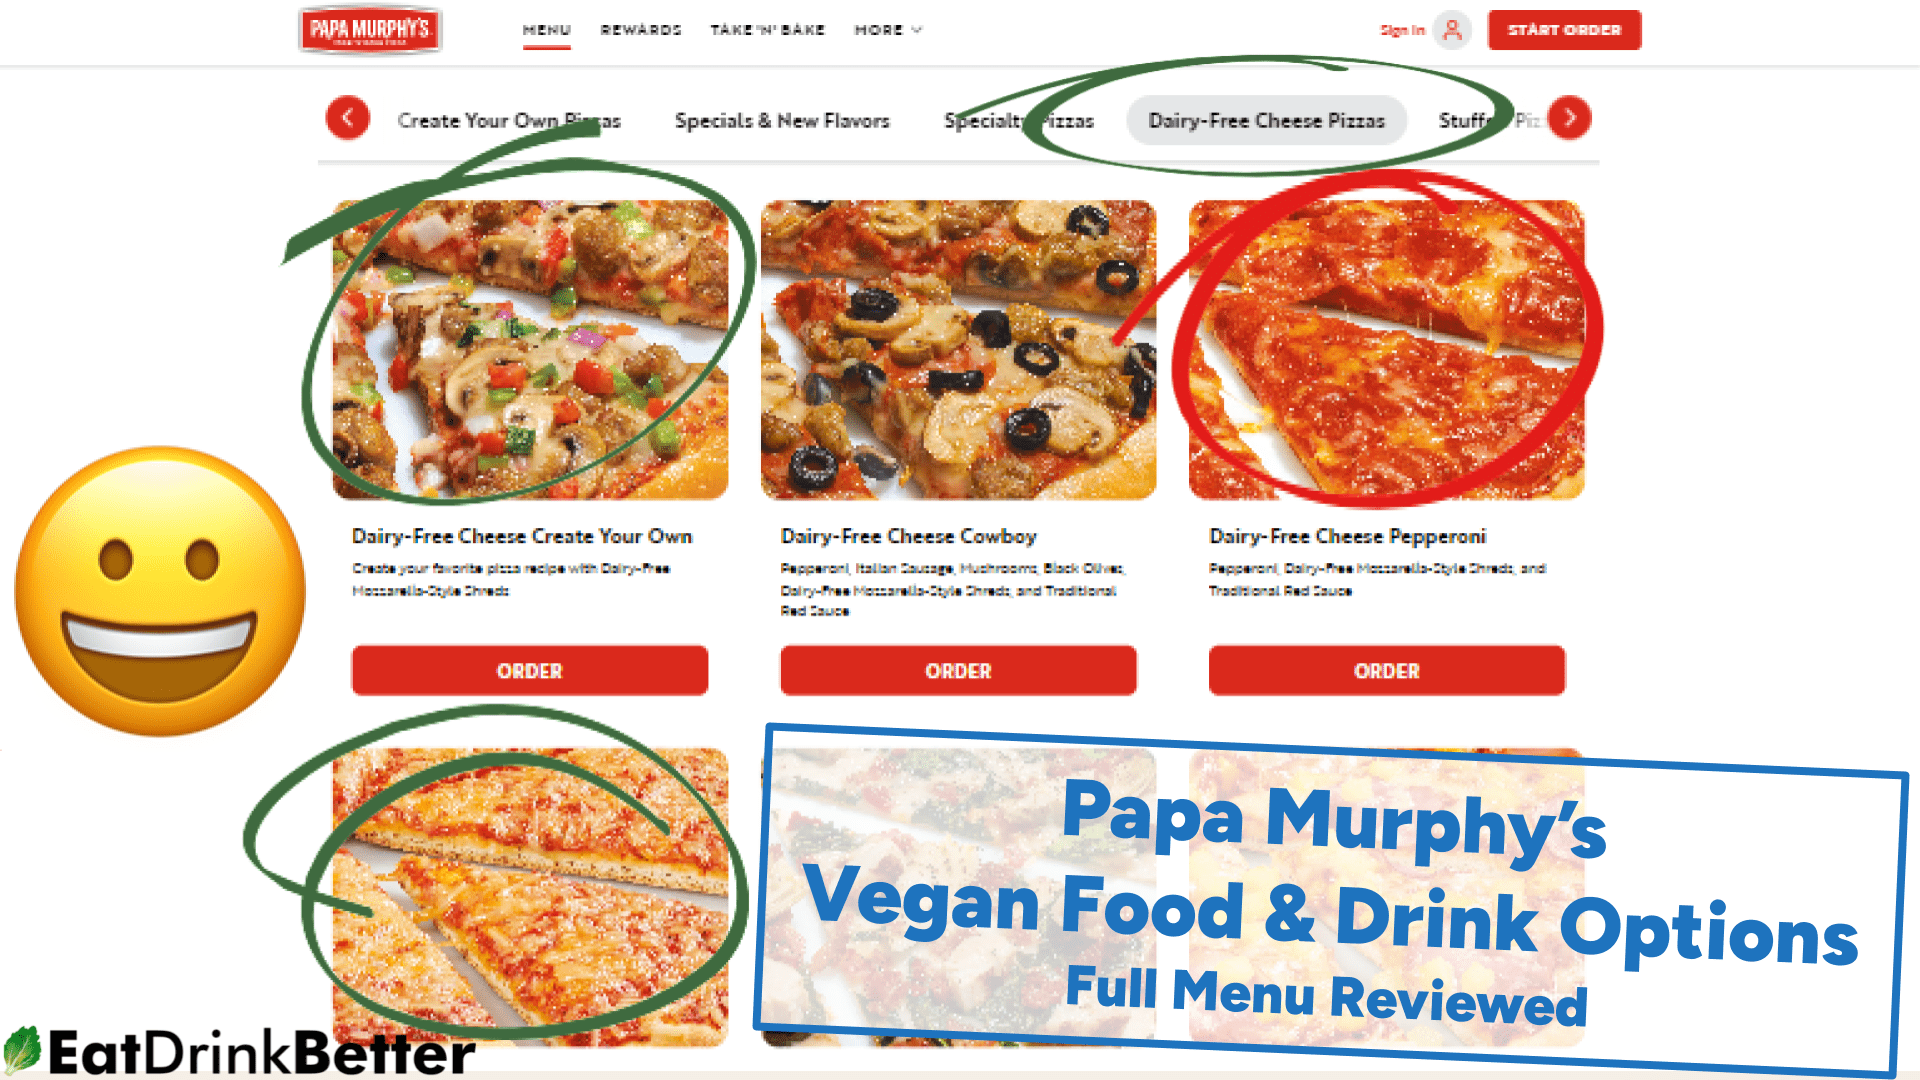 Menu - Papa Murphy's Pizza